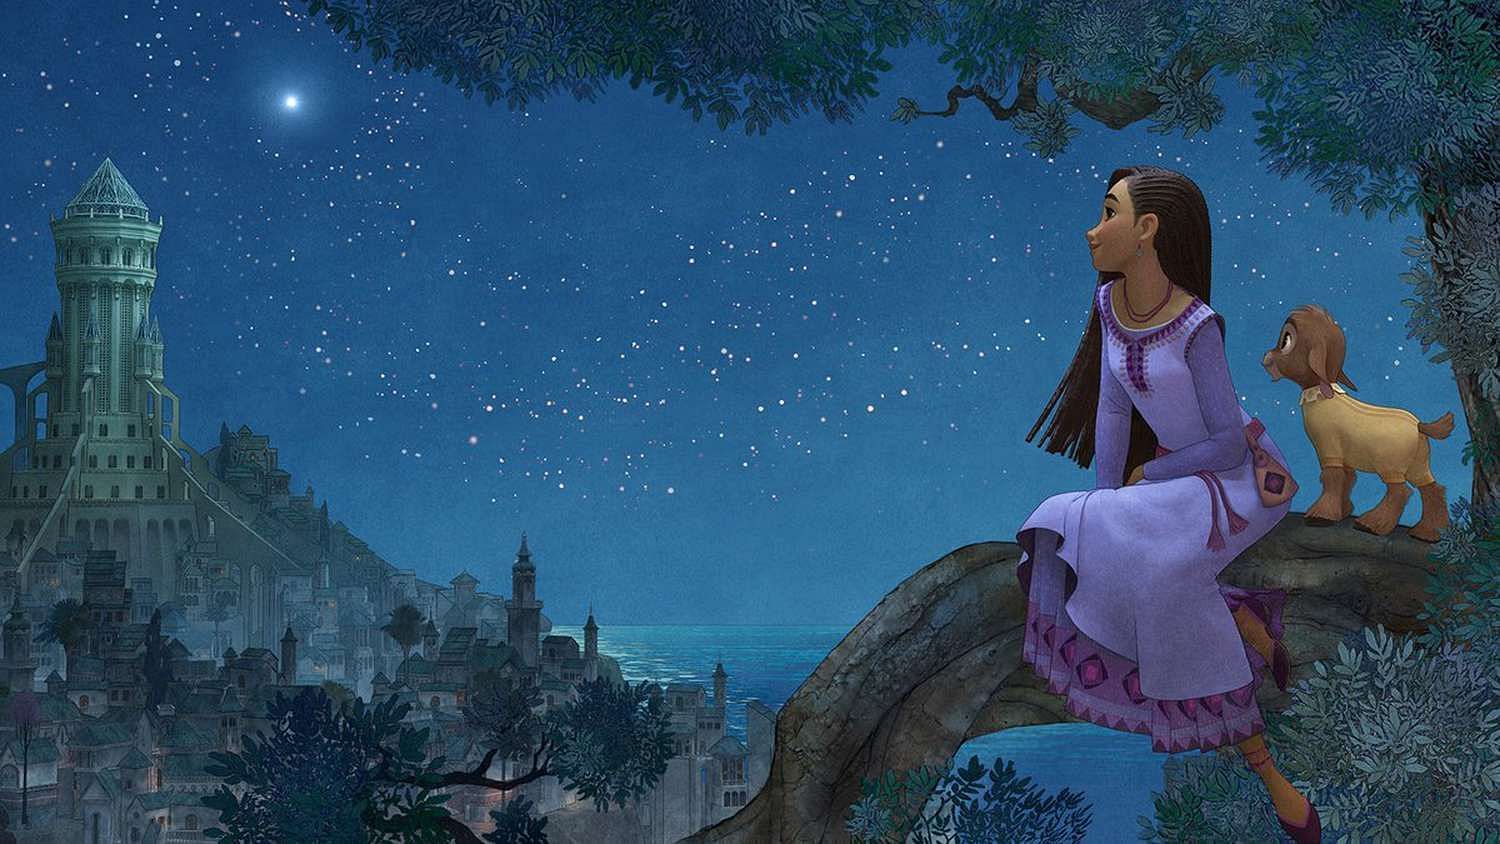 A Century of Animation: Wish Celebrates Disney